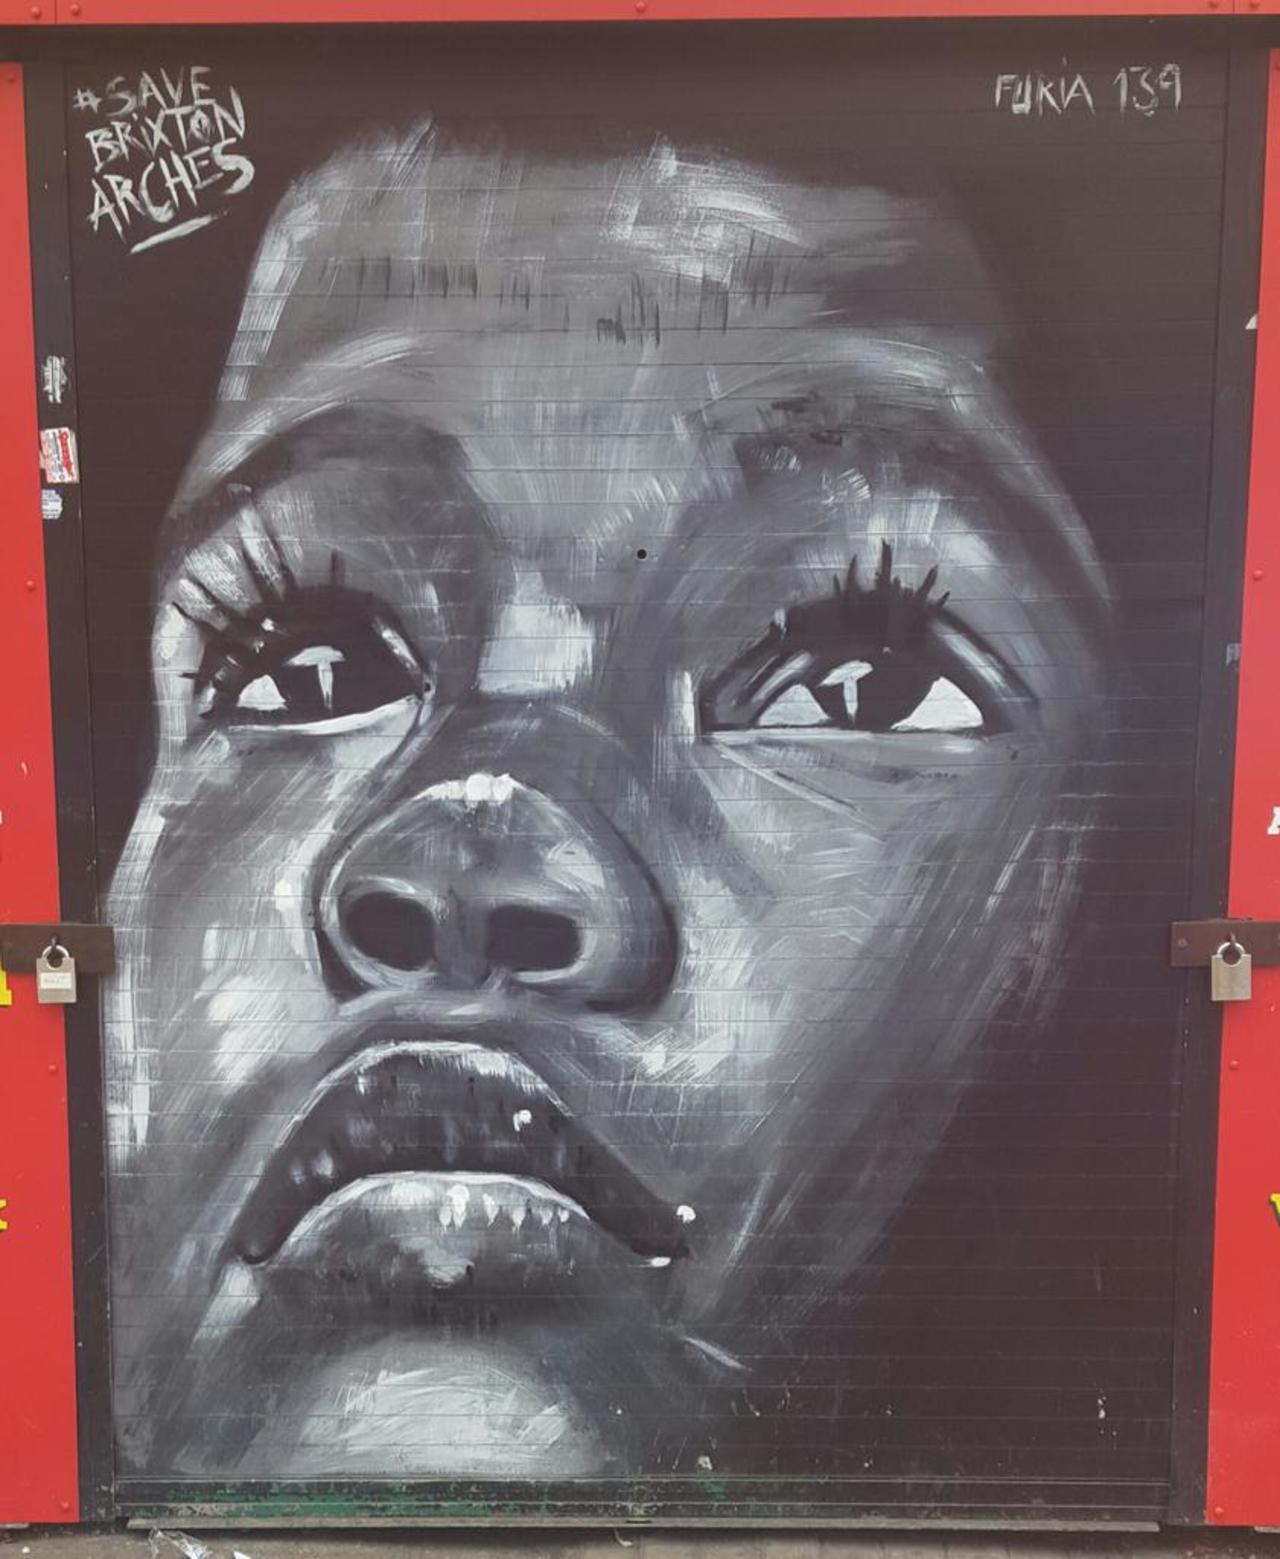 RT @chickenpox13: #savebrixtonarches #StreetArt #graffiti #Brixton https://t.co/Jksg4By80u